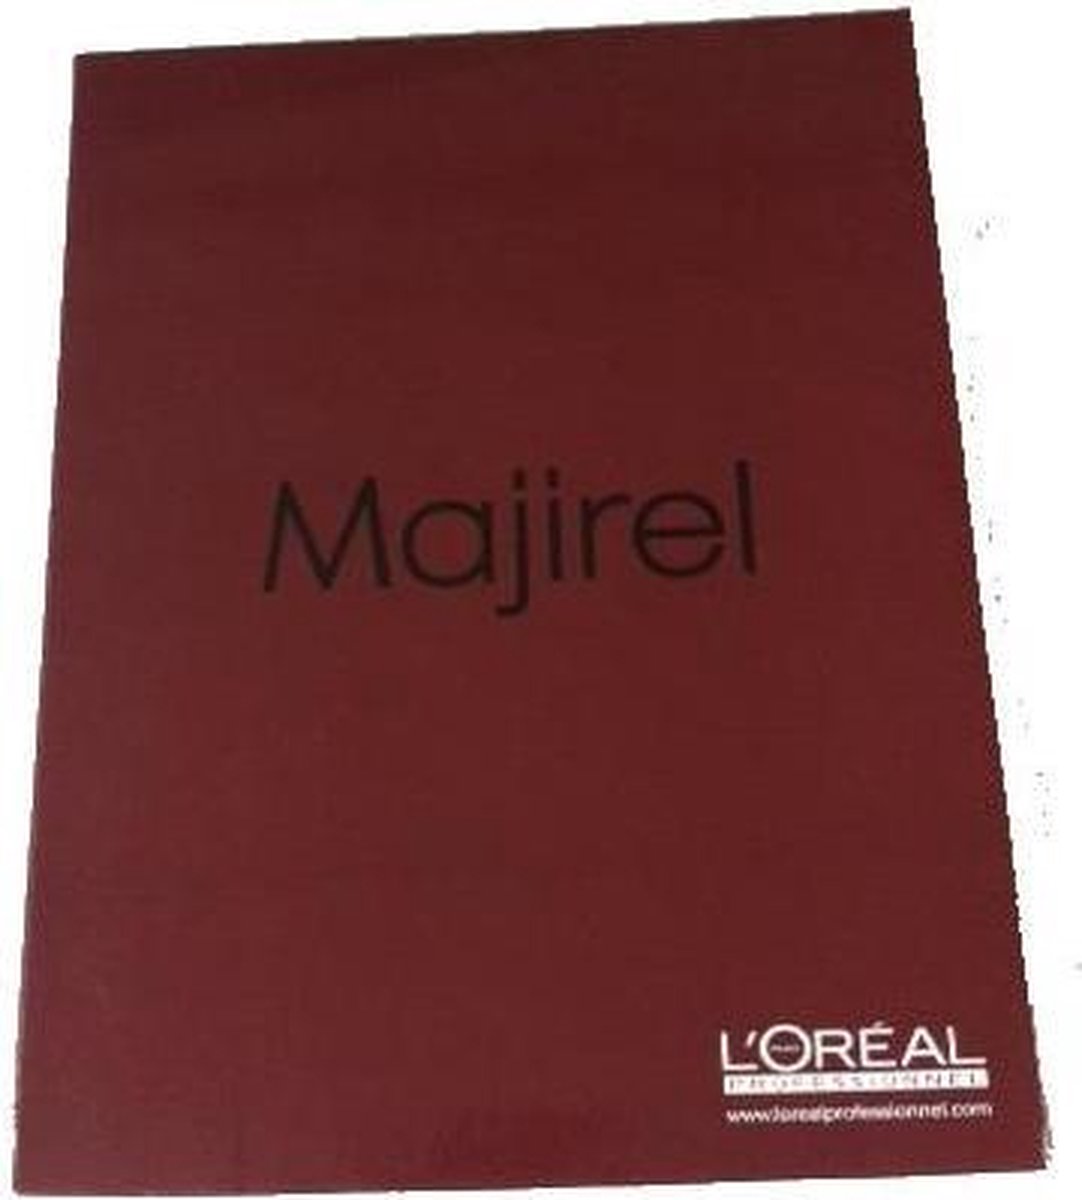 L'Oreal Kleurenboek Majirel | bol.com